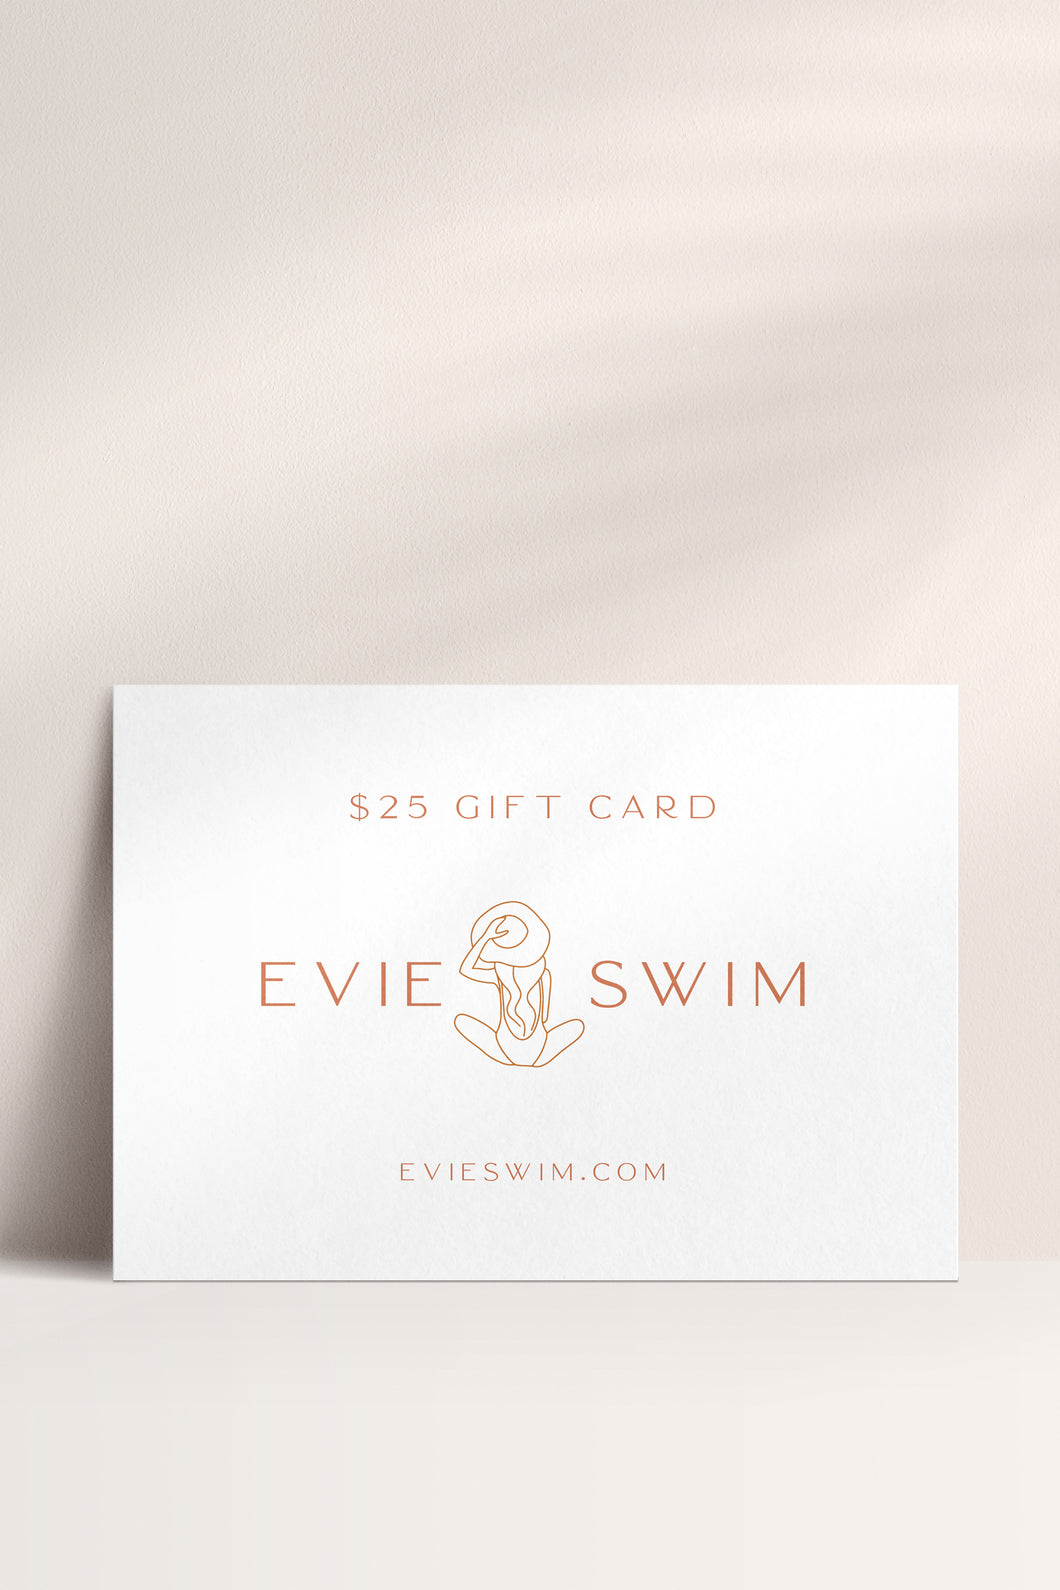 EvieSwim Gift Card